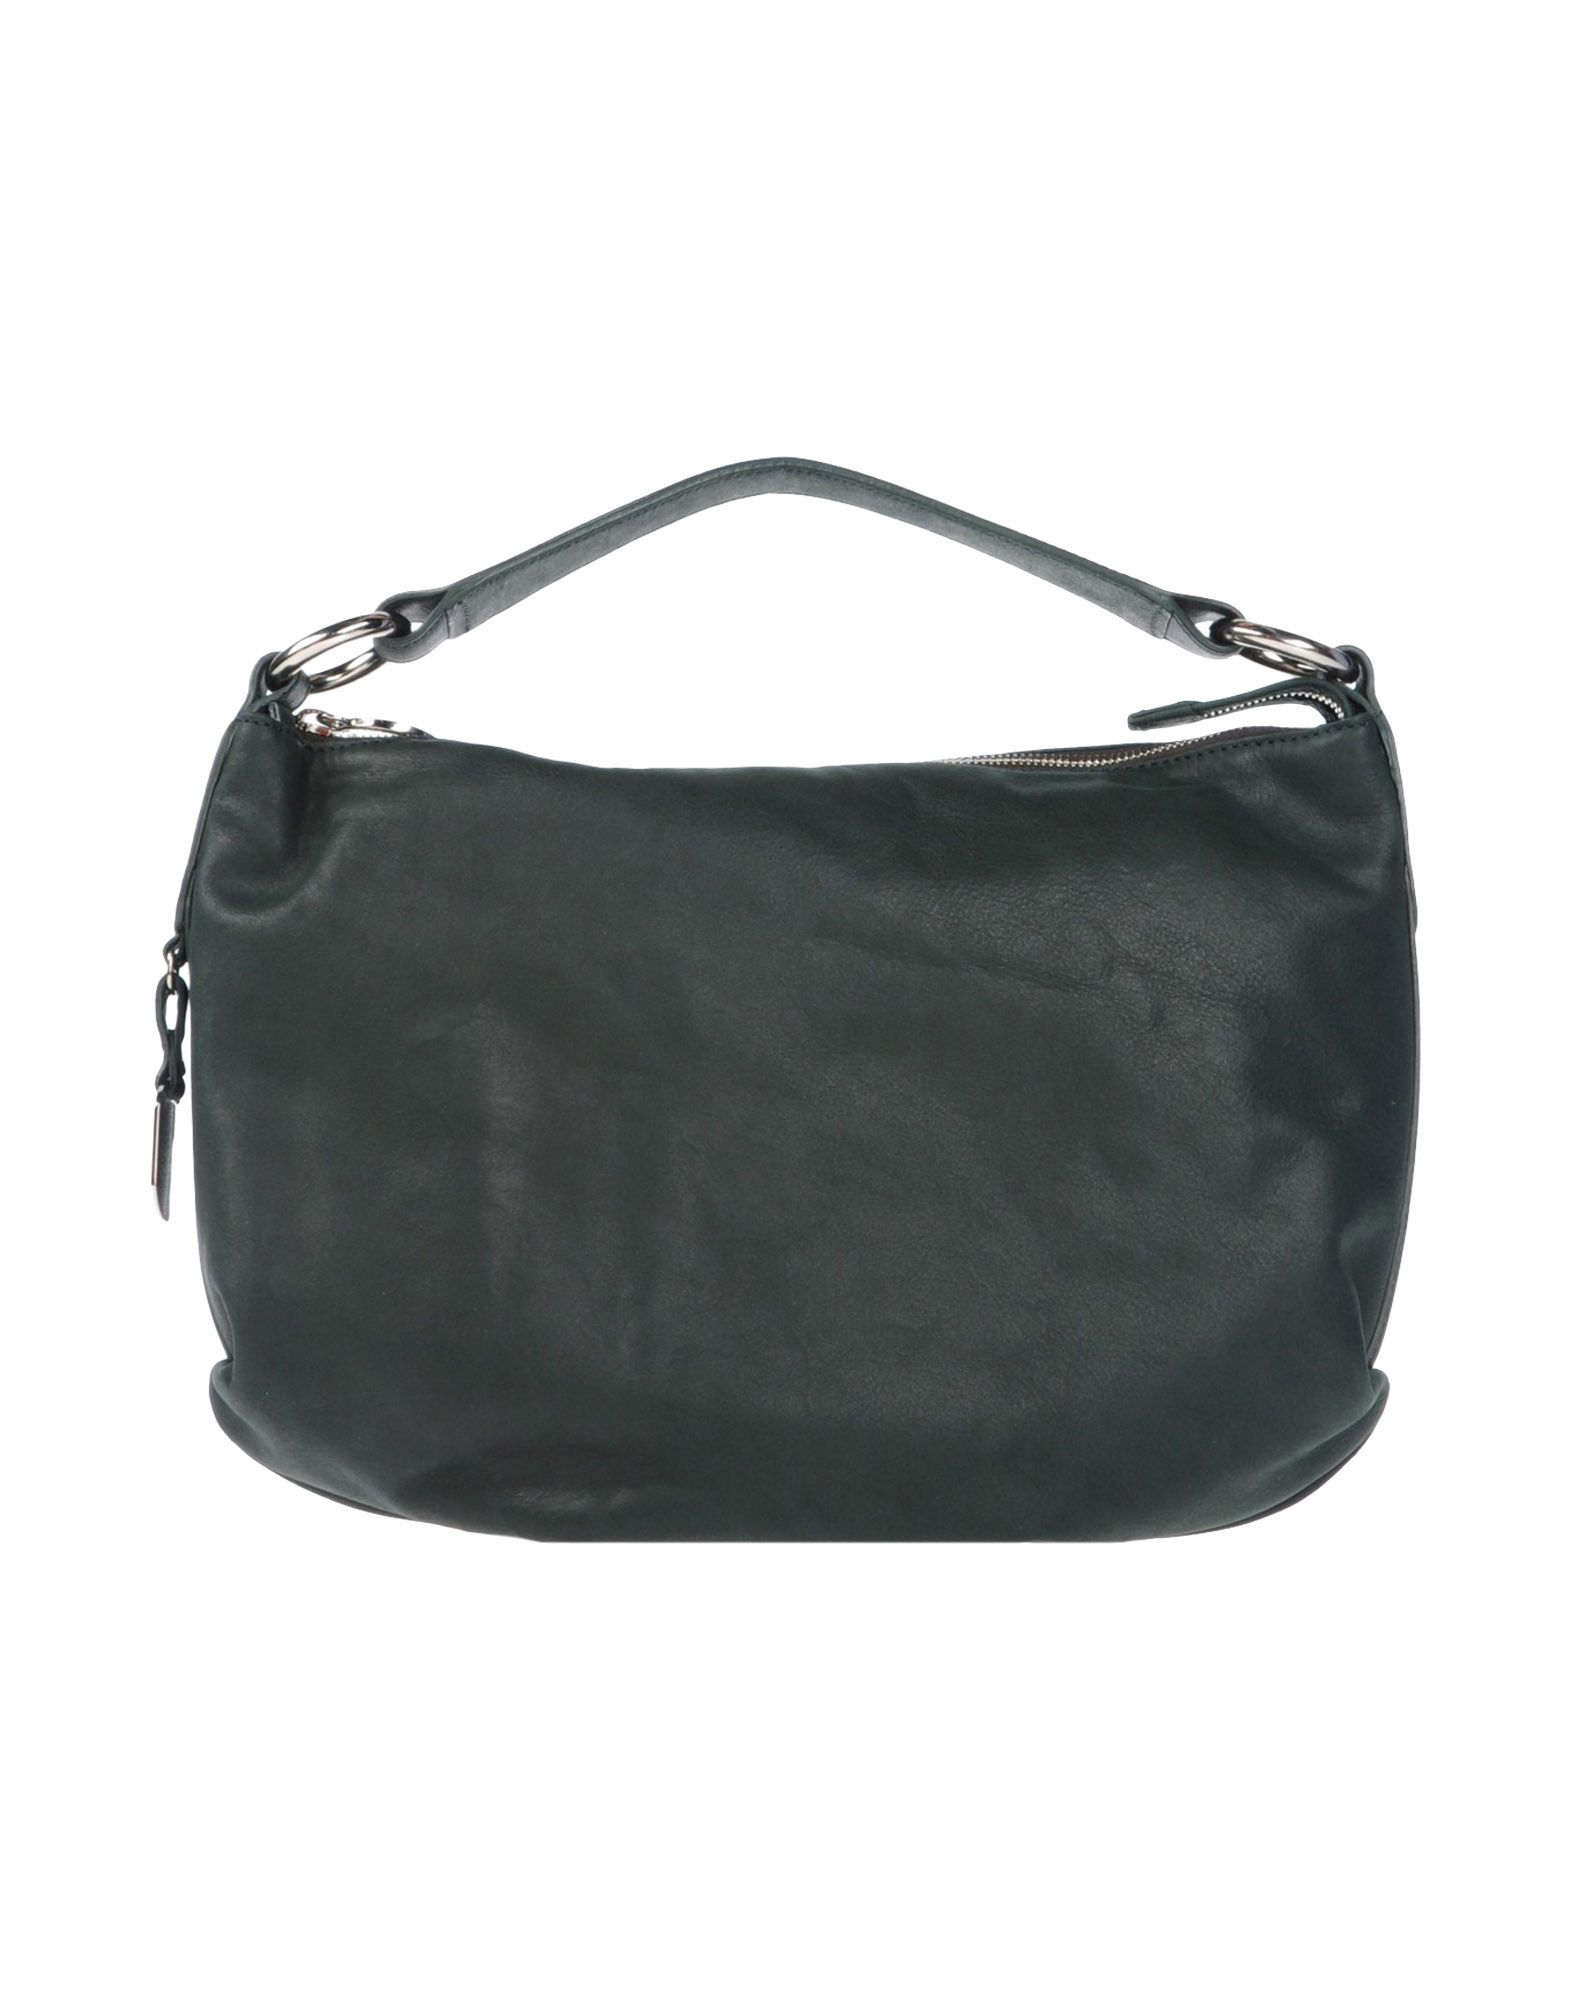 Lyst - Tosca Blu Handbag in Green